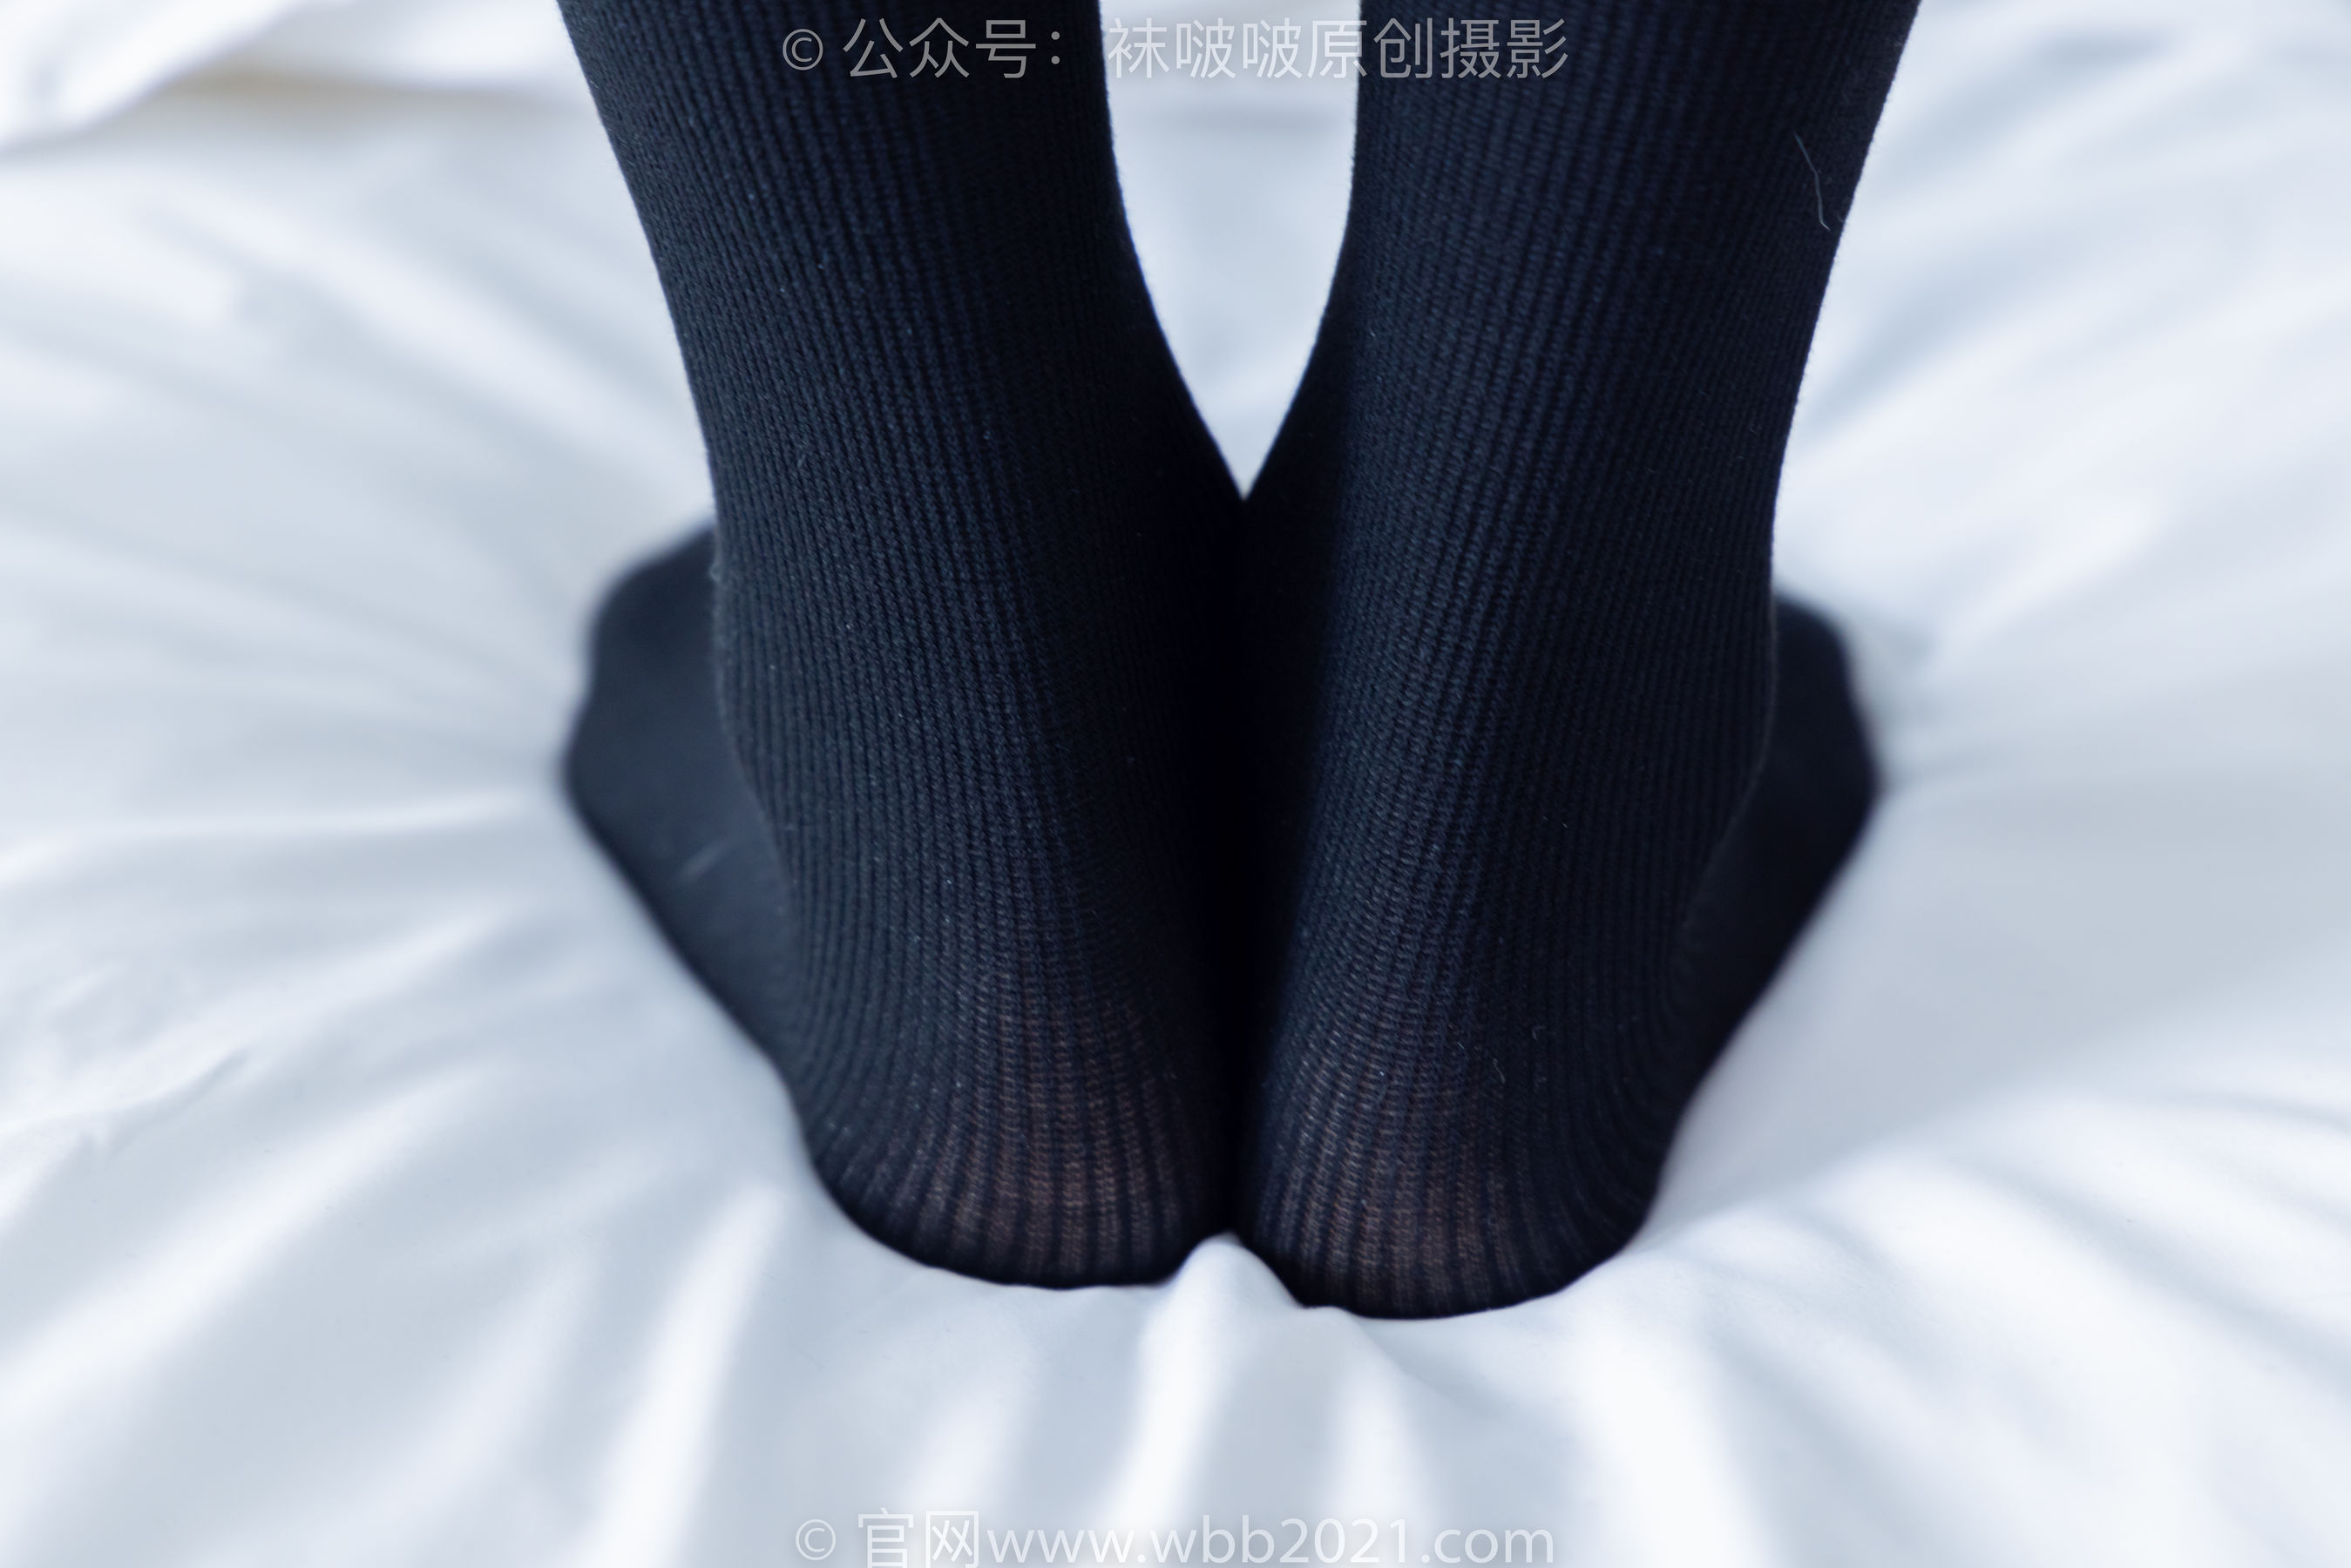 BoBoSocks袜啵啵 No.319 奶油 -高跟鞋、平底鞋、厚肉丝、厚黑丝大腿袜/(140P)